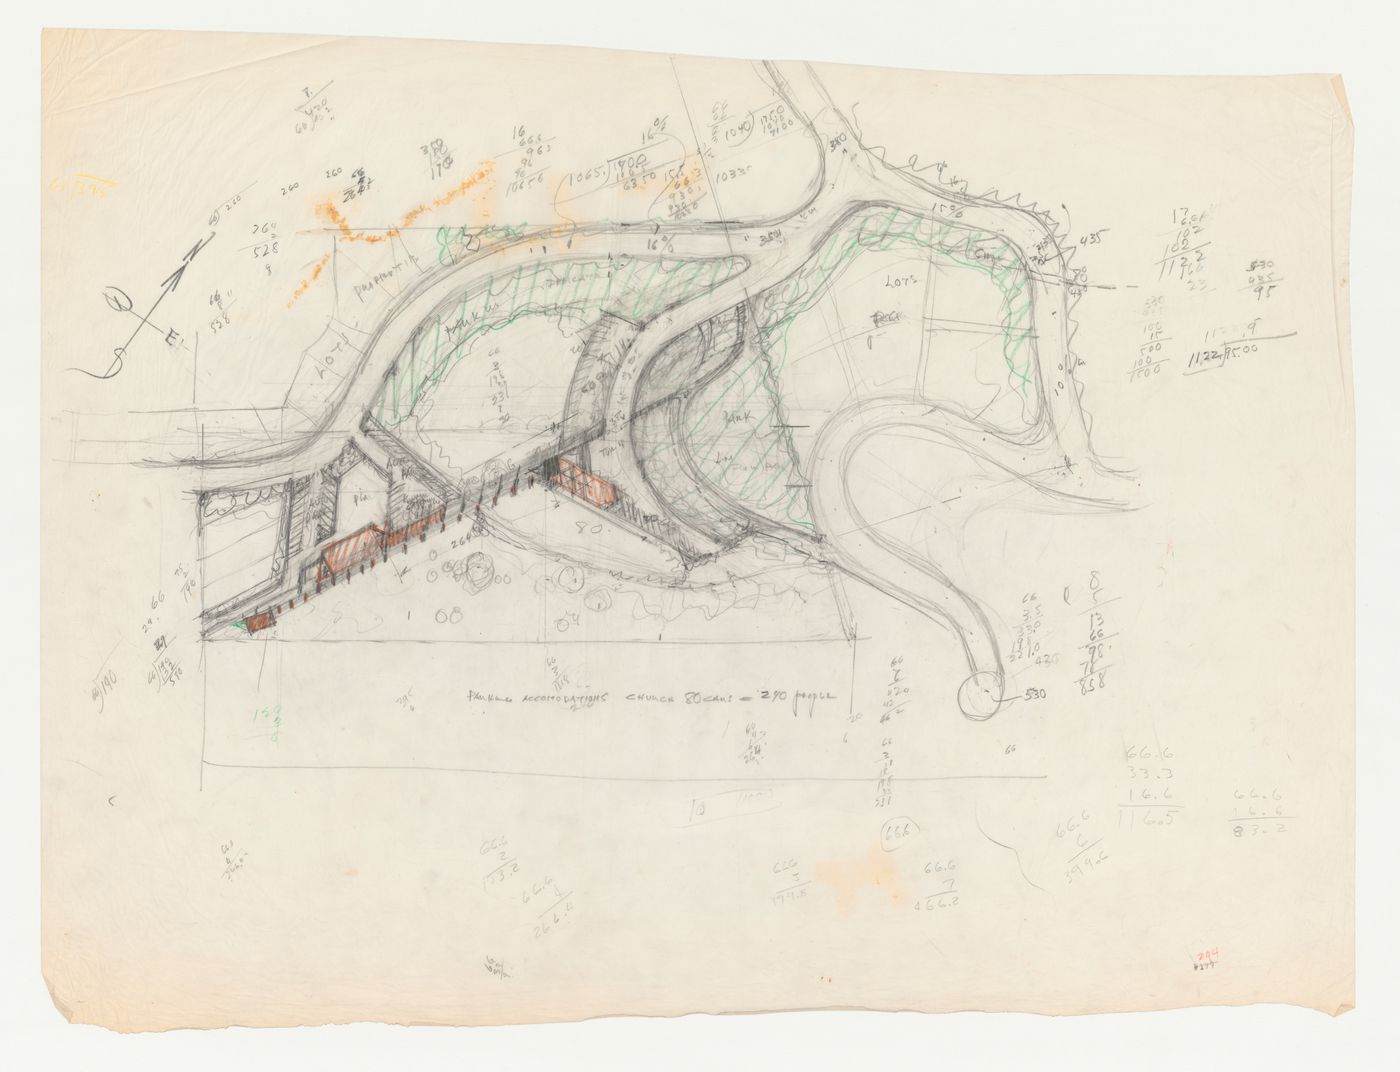 Swedenborg Memorial Chapel, El Cerrito, California: Sketch site plan showing roads, parking lot and planting